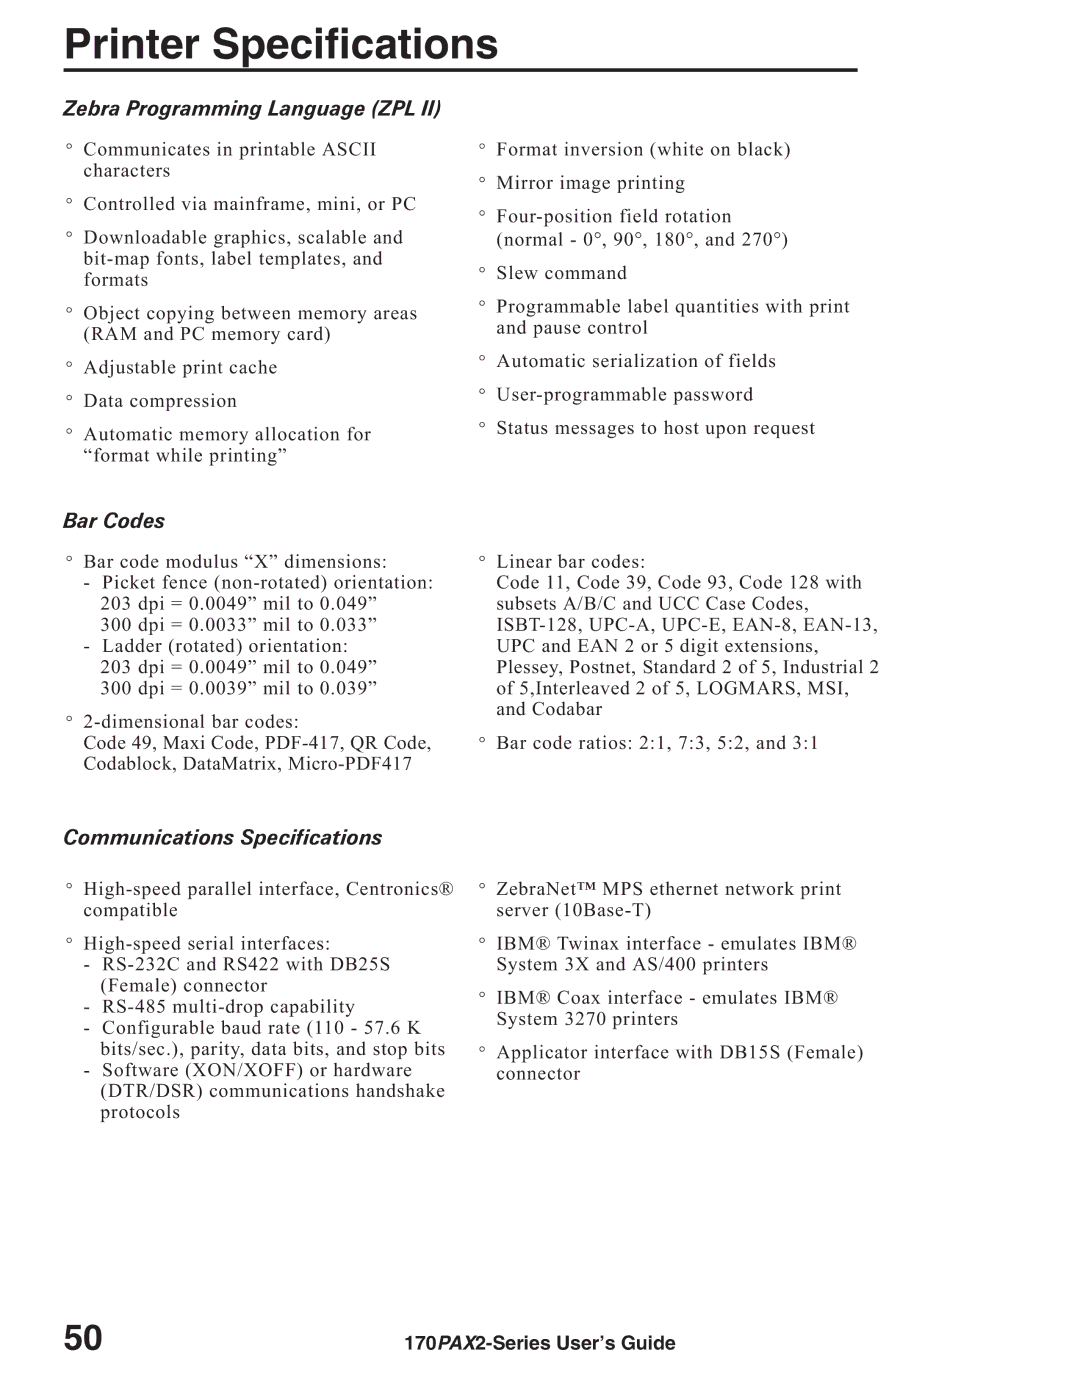 Zebra Technologies 170PAX2TM manual Zebra Programming Language ZPL, Bar Codes, Communications Specifications 